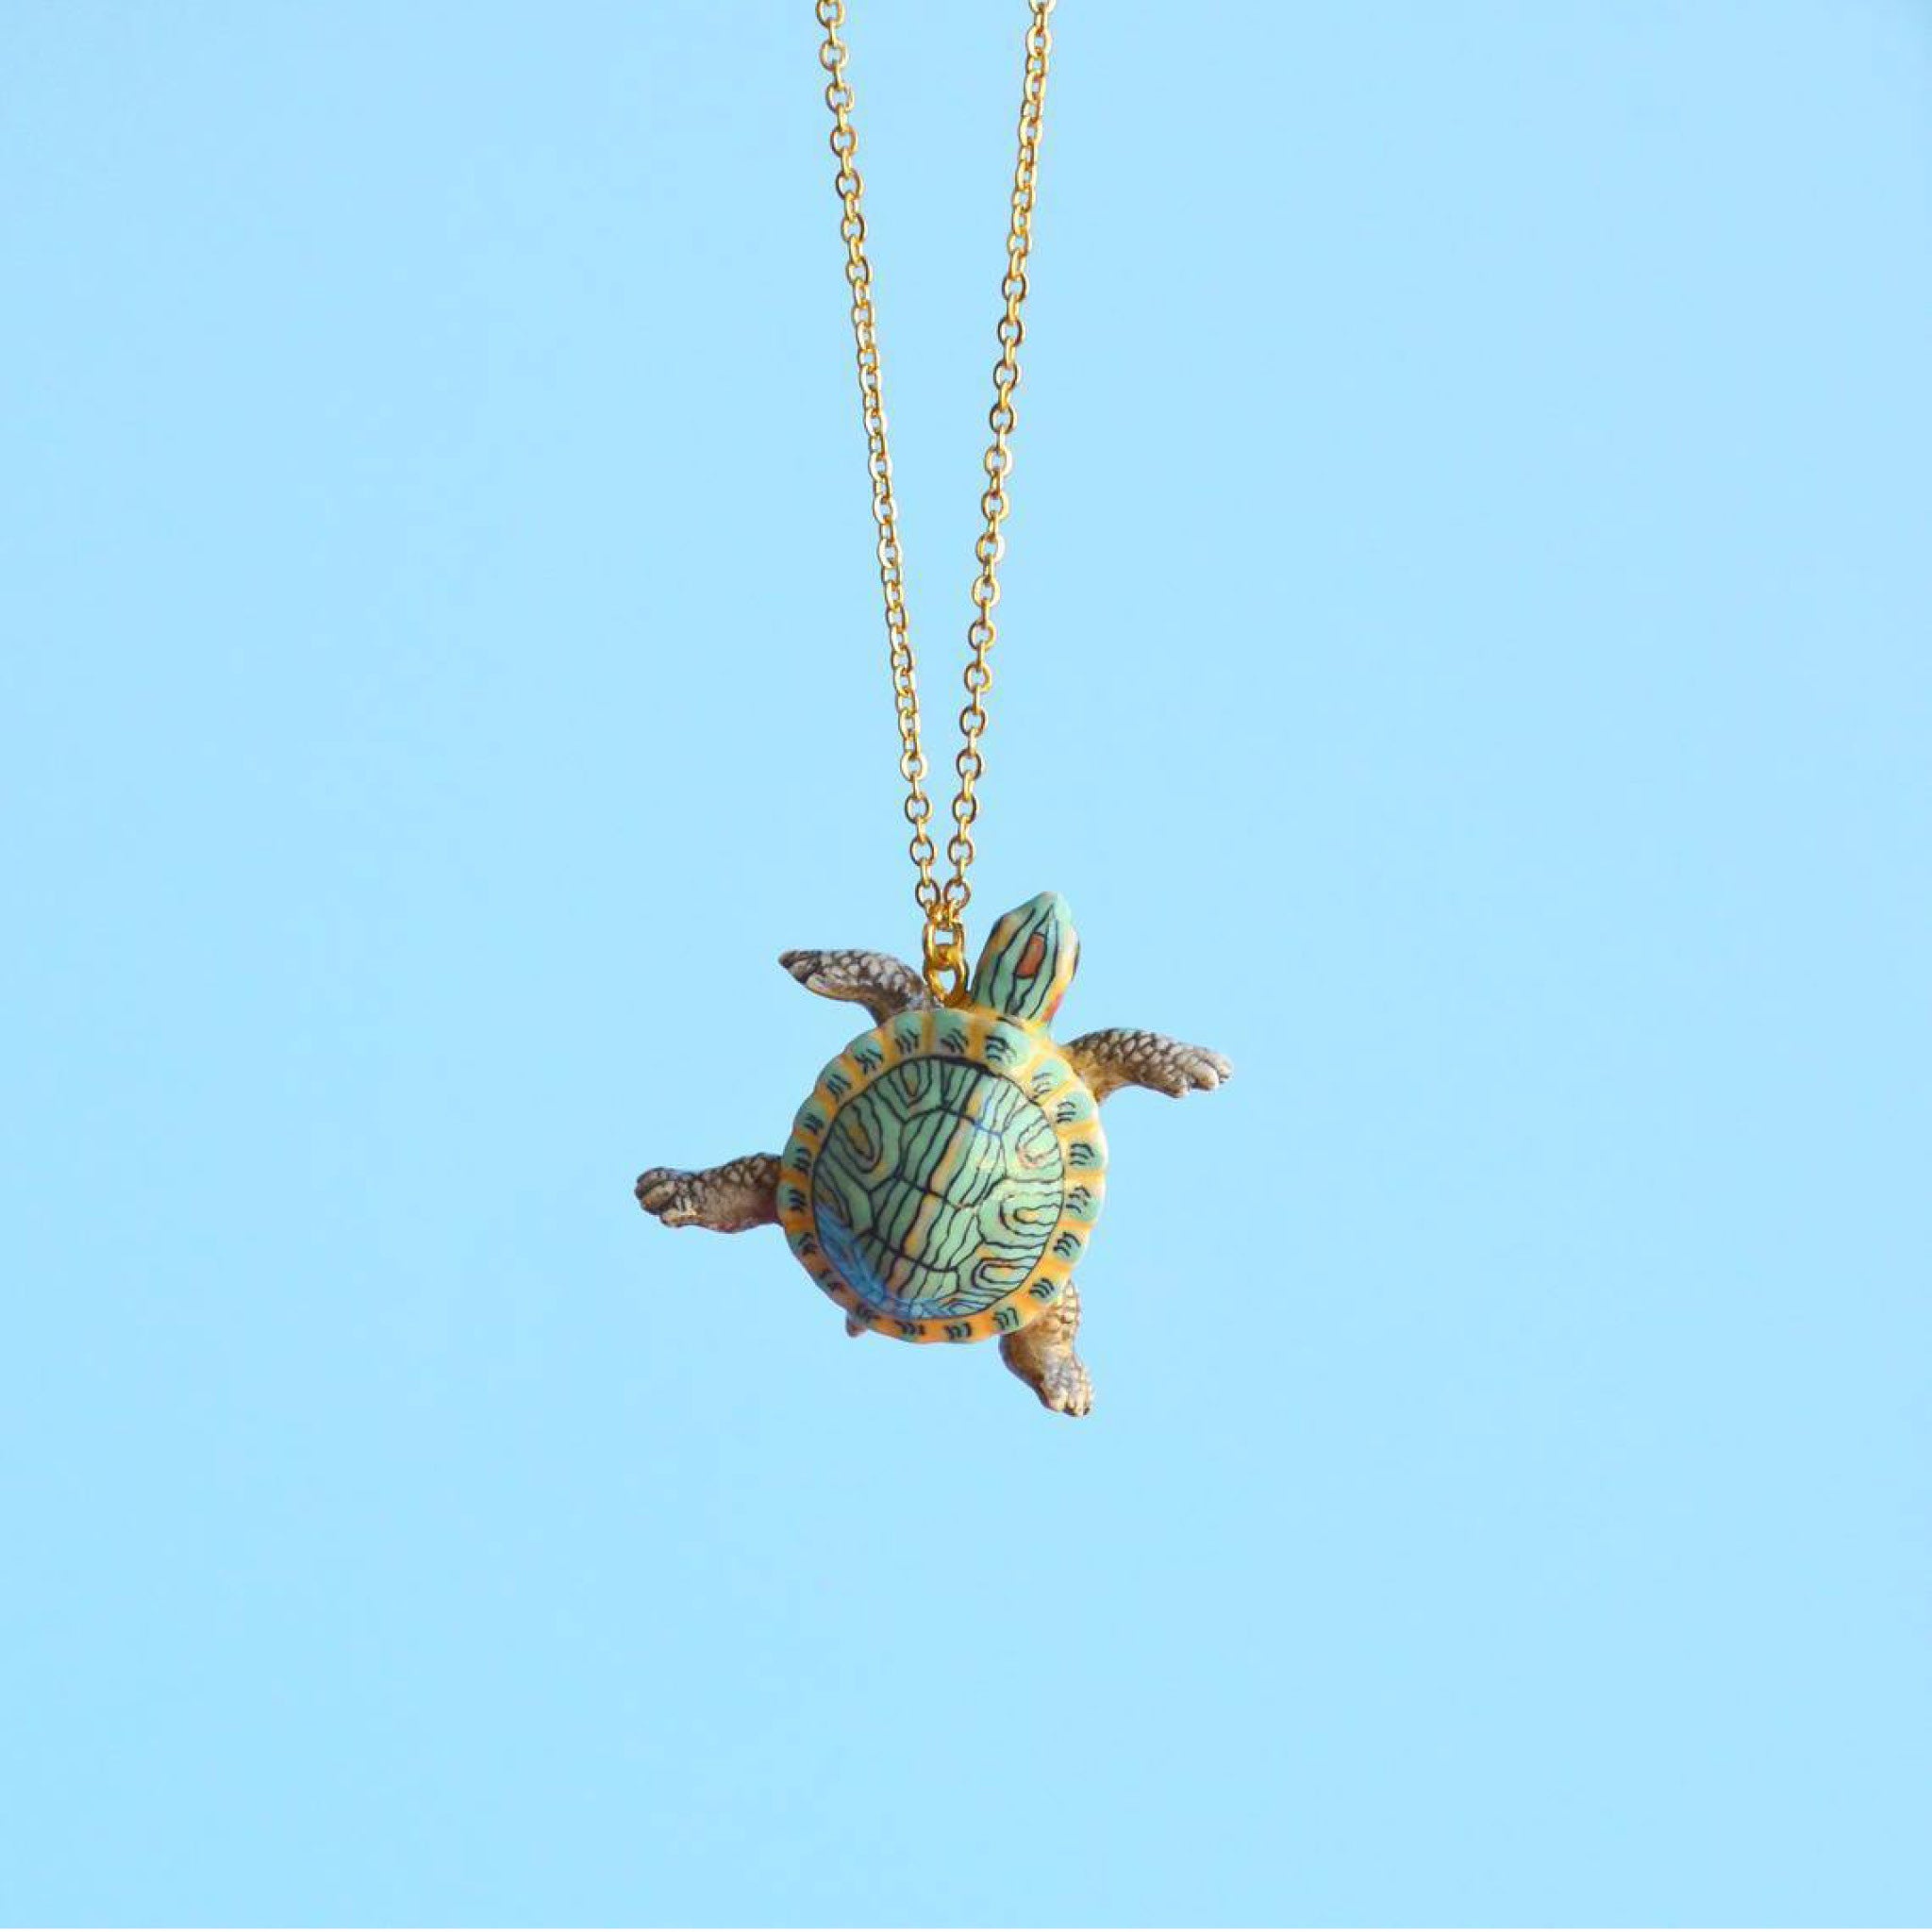 Turtle Necklace | Camp Hollow Ceramic Animal Jewelry